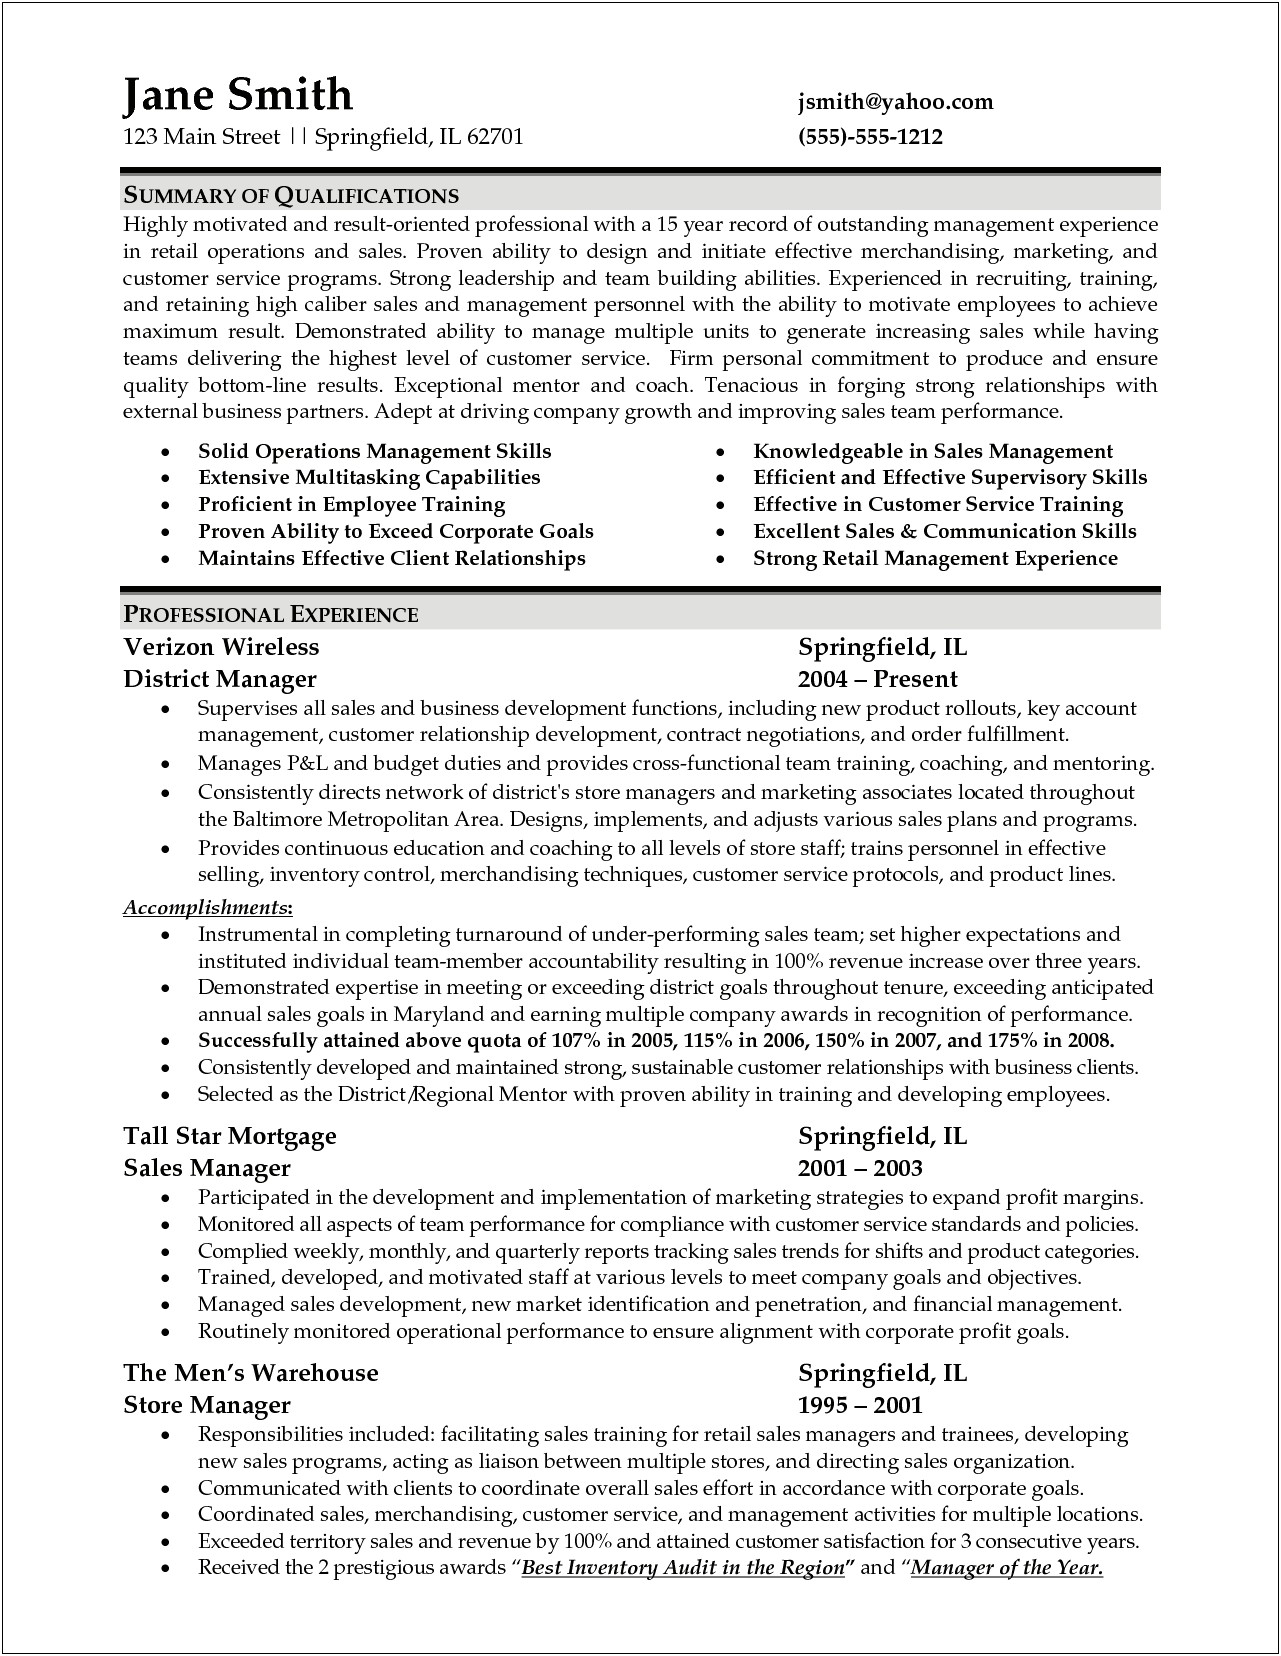 Job Description Retail Manager Resume